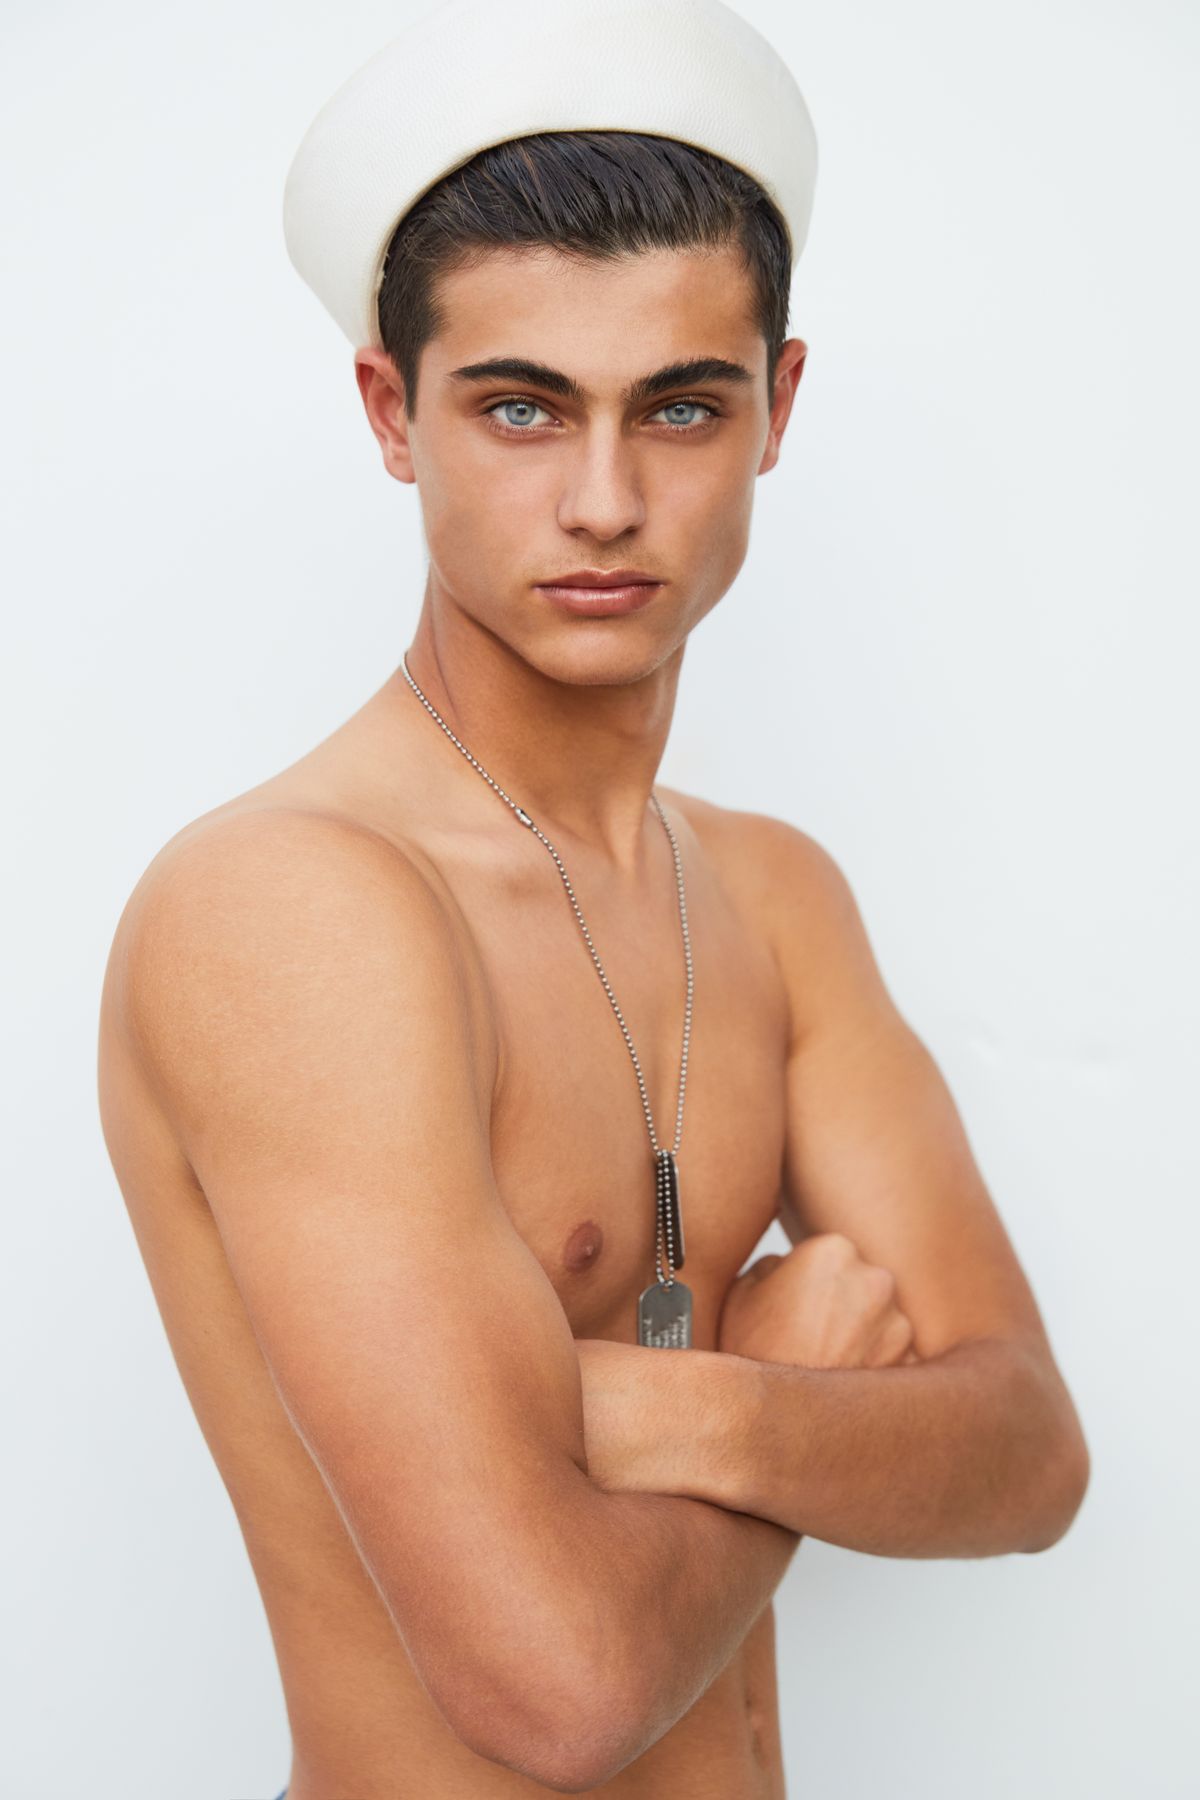 Model Ricky Pasin